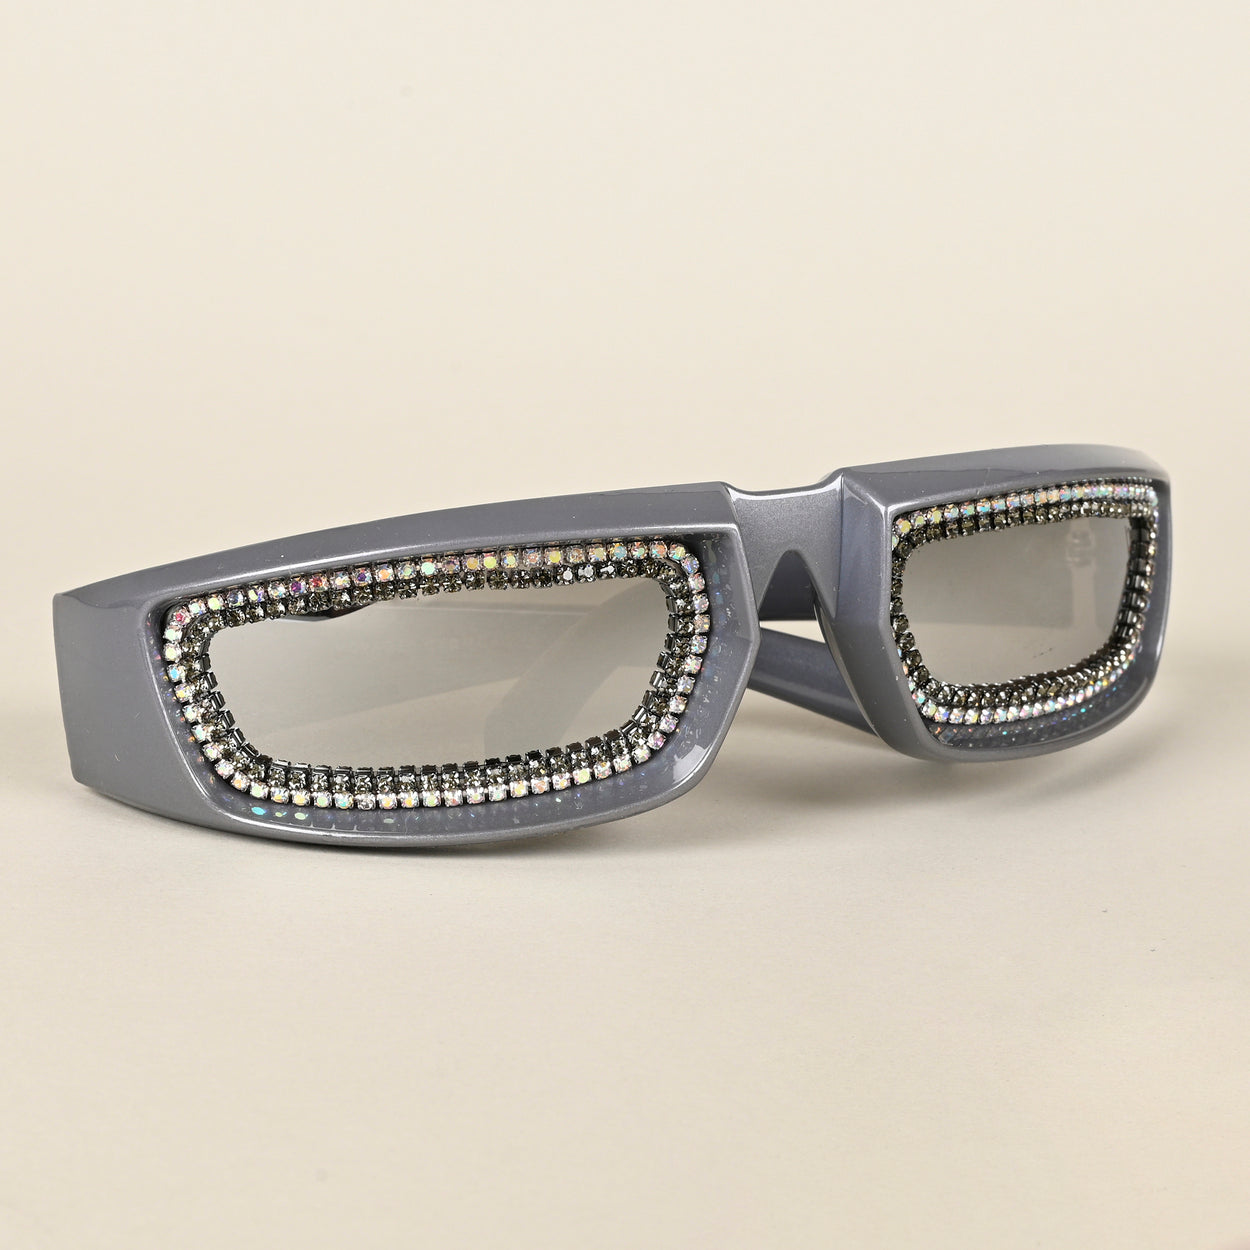 Voyage Silver Wrap-Around Sunglasses for Men & Women - MG4354